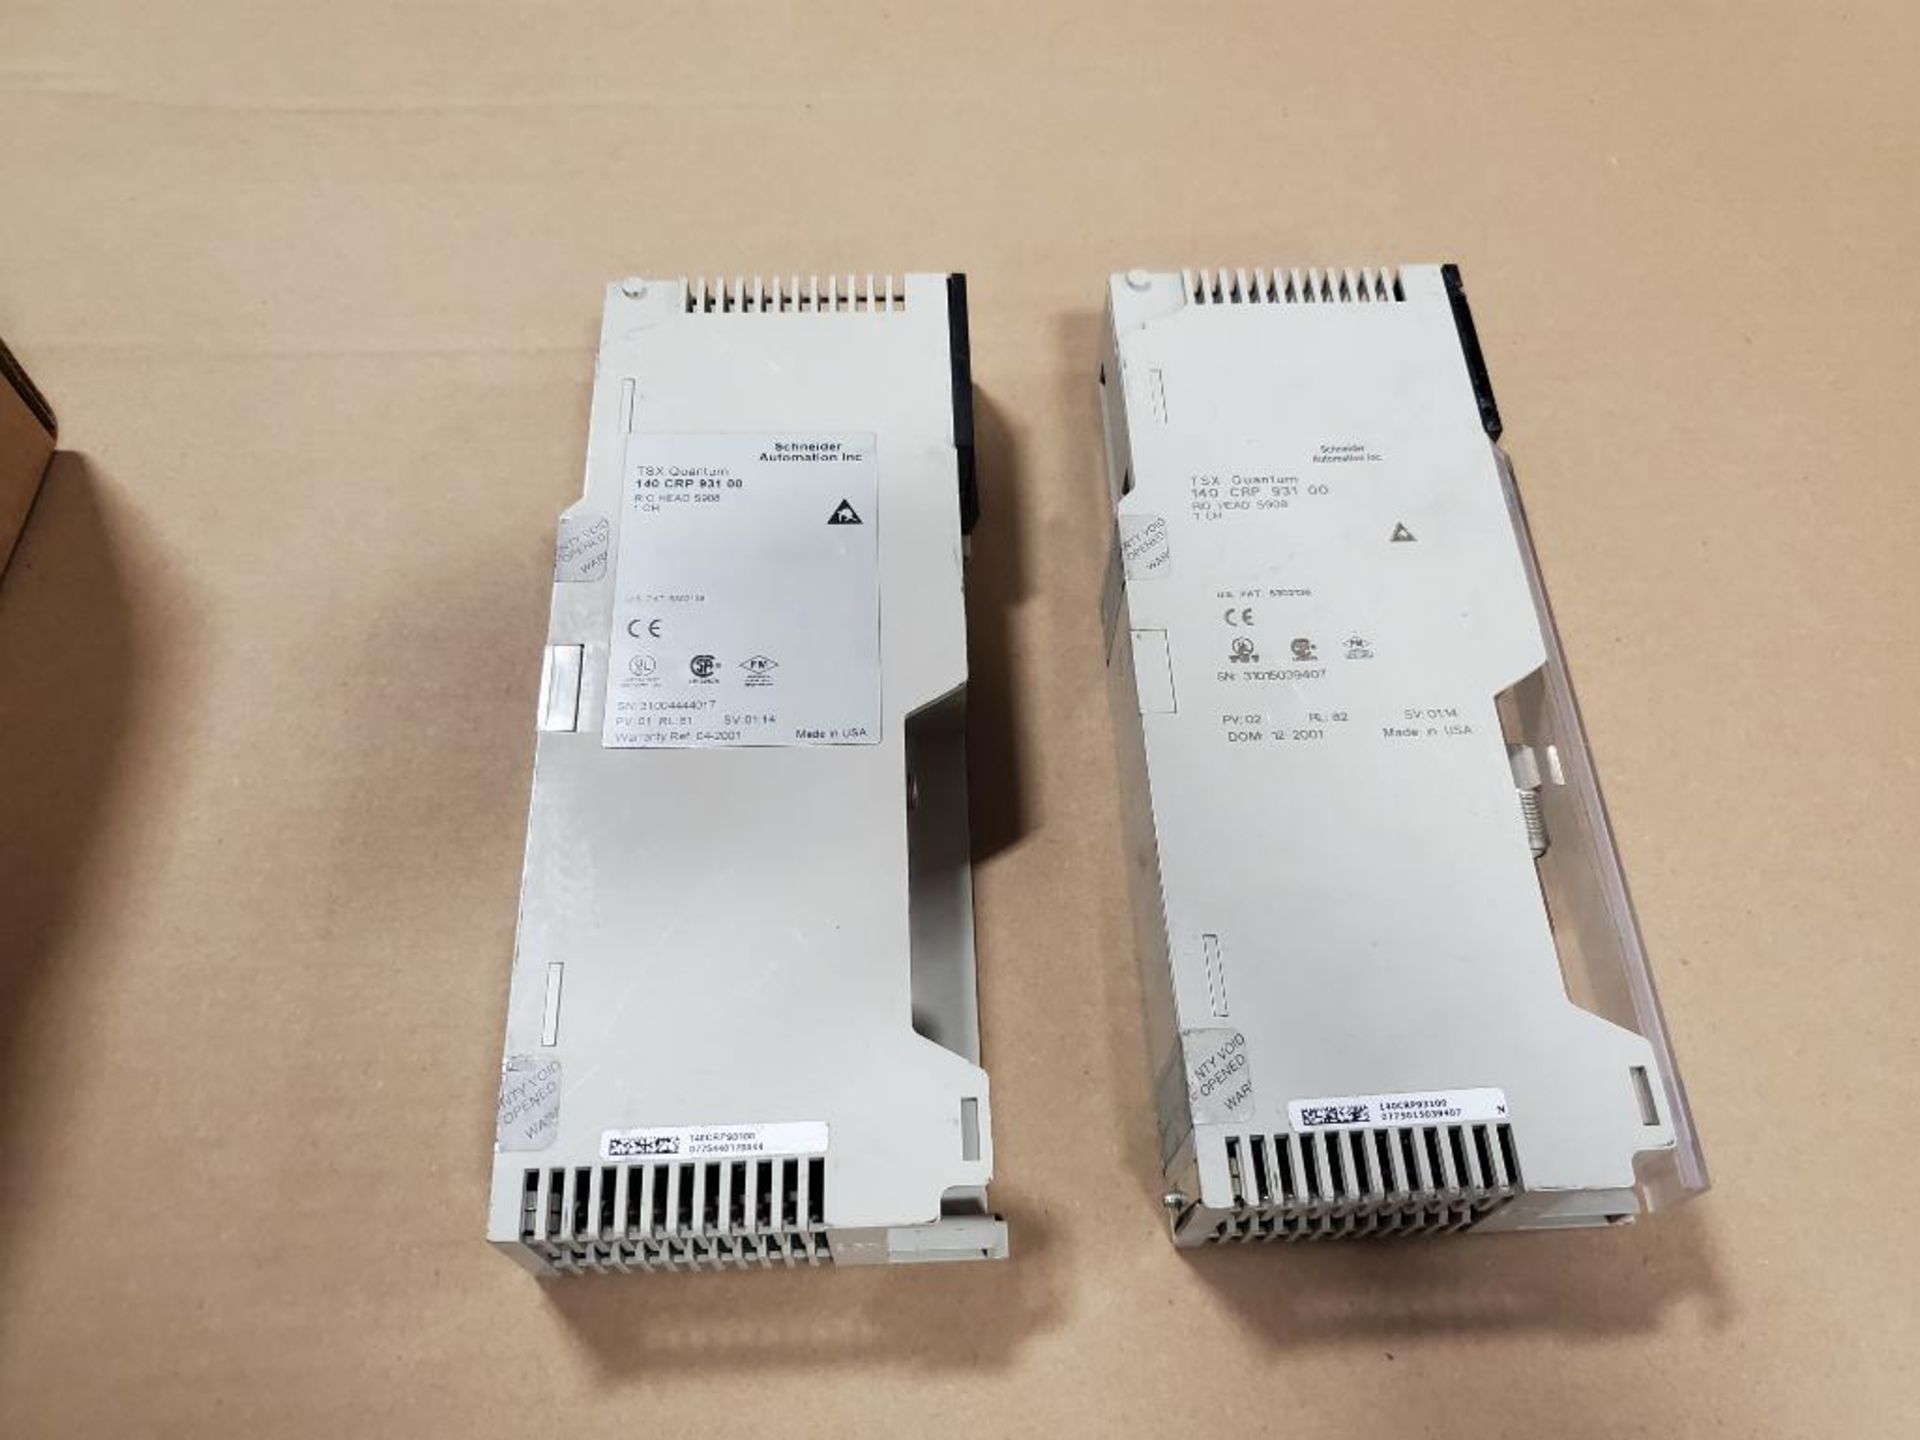 Qty 2 - Schneider Automation INC. TSX Quantum 140-CRP-931-00 RIO HEAD S908 1 CH module. - Image 3 of 5